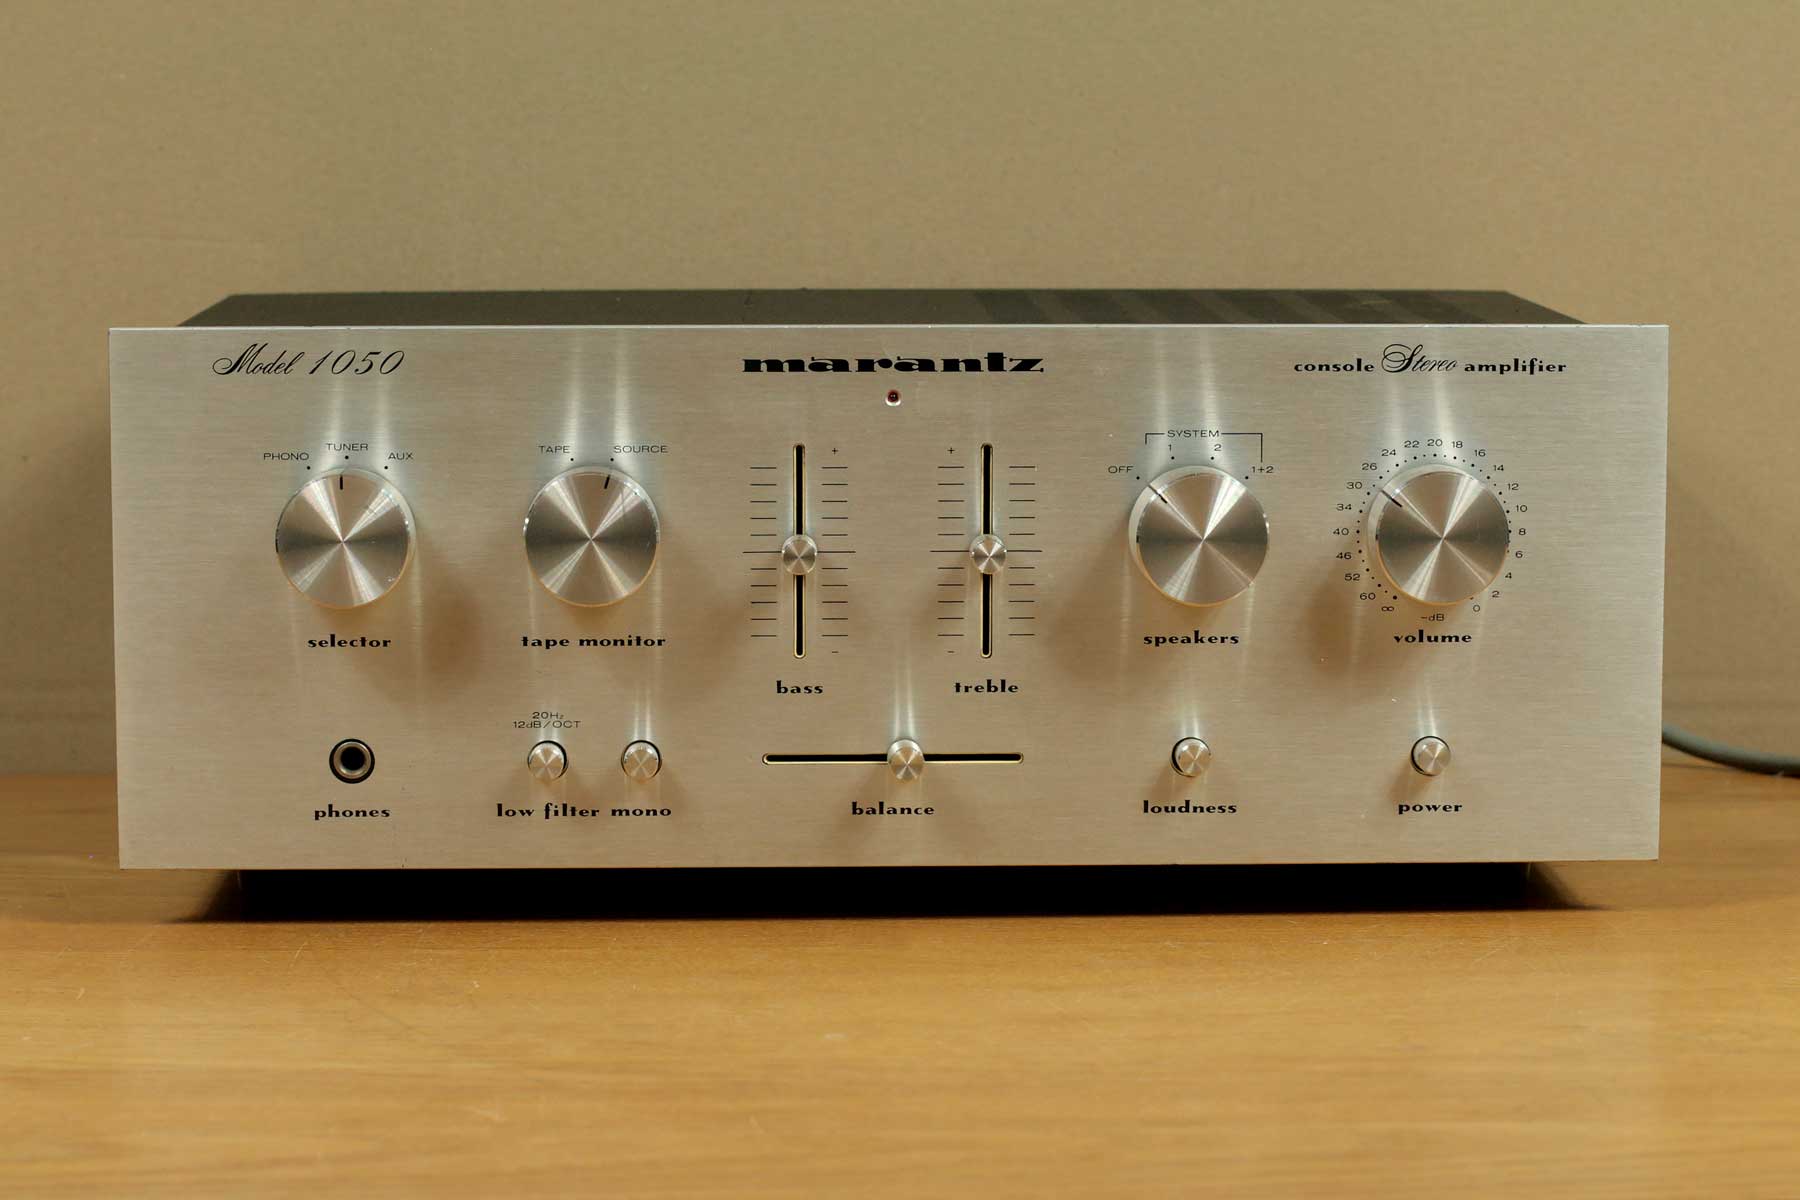 Marantz 1050 • Stereo console amplifier